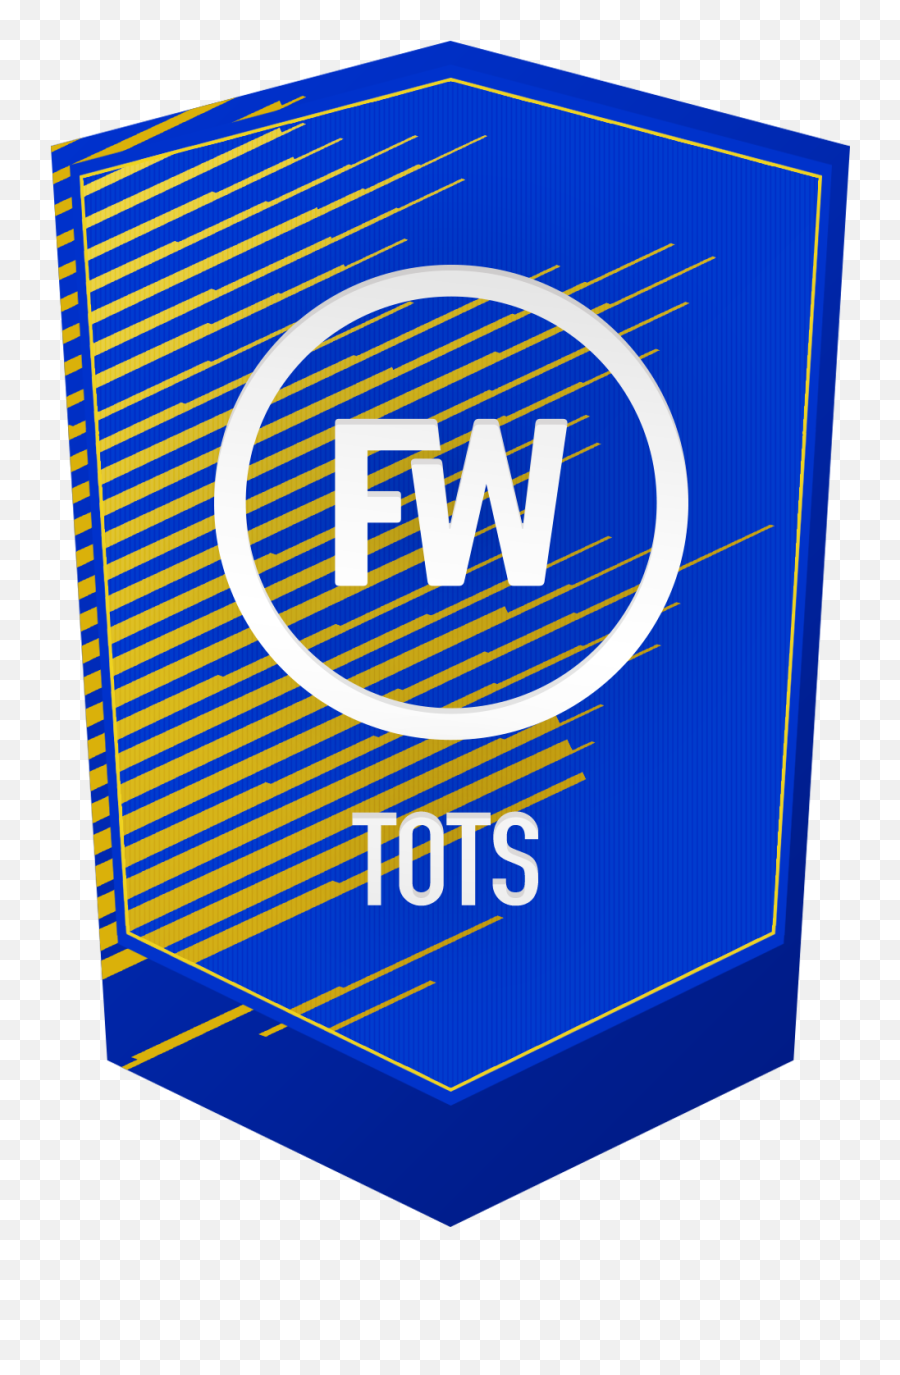 Fifa 18 Pack Opener - Futwiz Promo Code For Fut 18 Pack Opener Png,18 Png